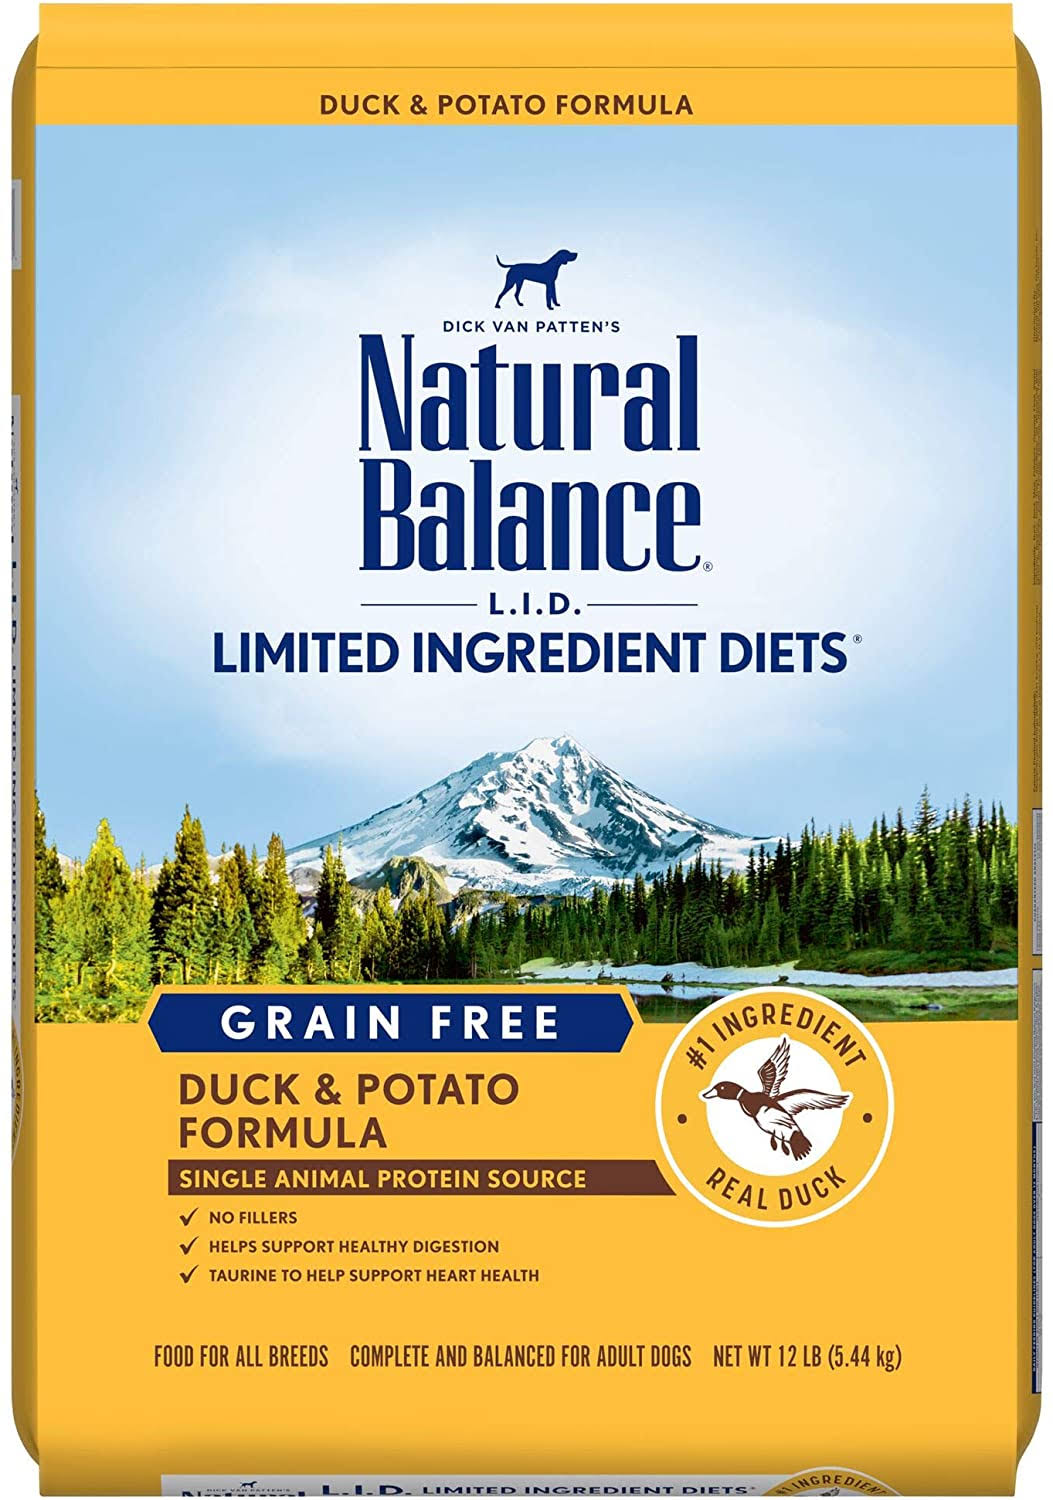 Natural Balance L.I.D. Limited Ingredient Diets Grain Free Duck & Potato Formula Adult Dry Dog Food